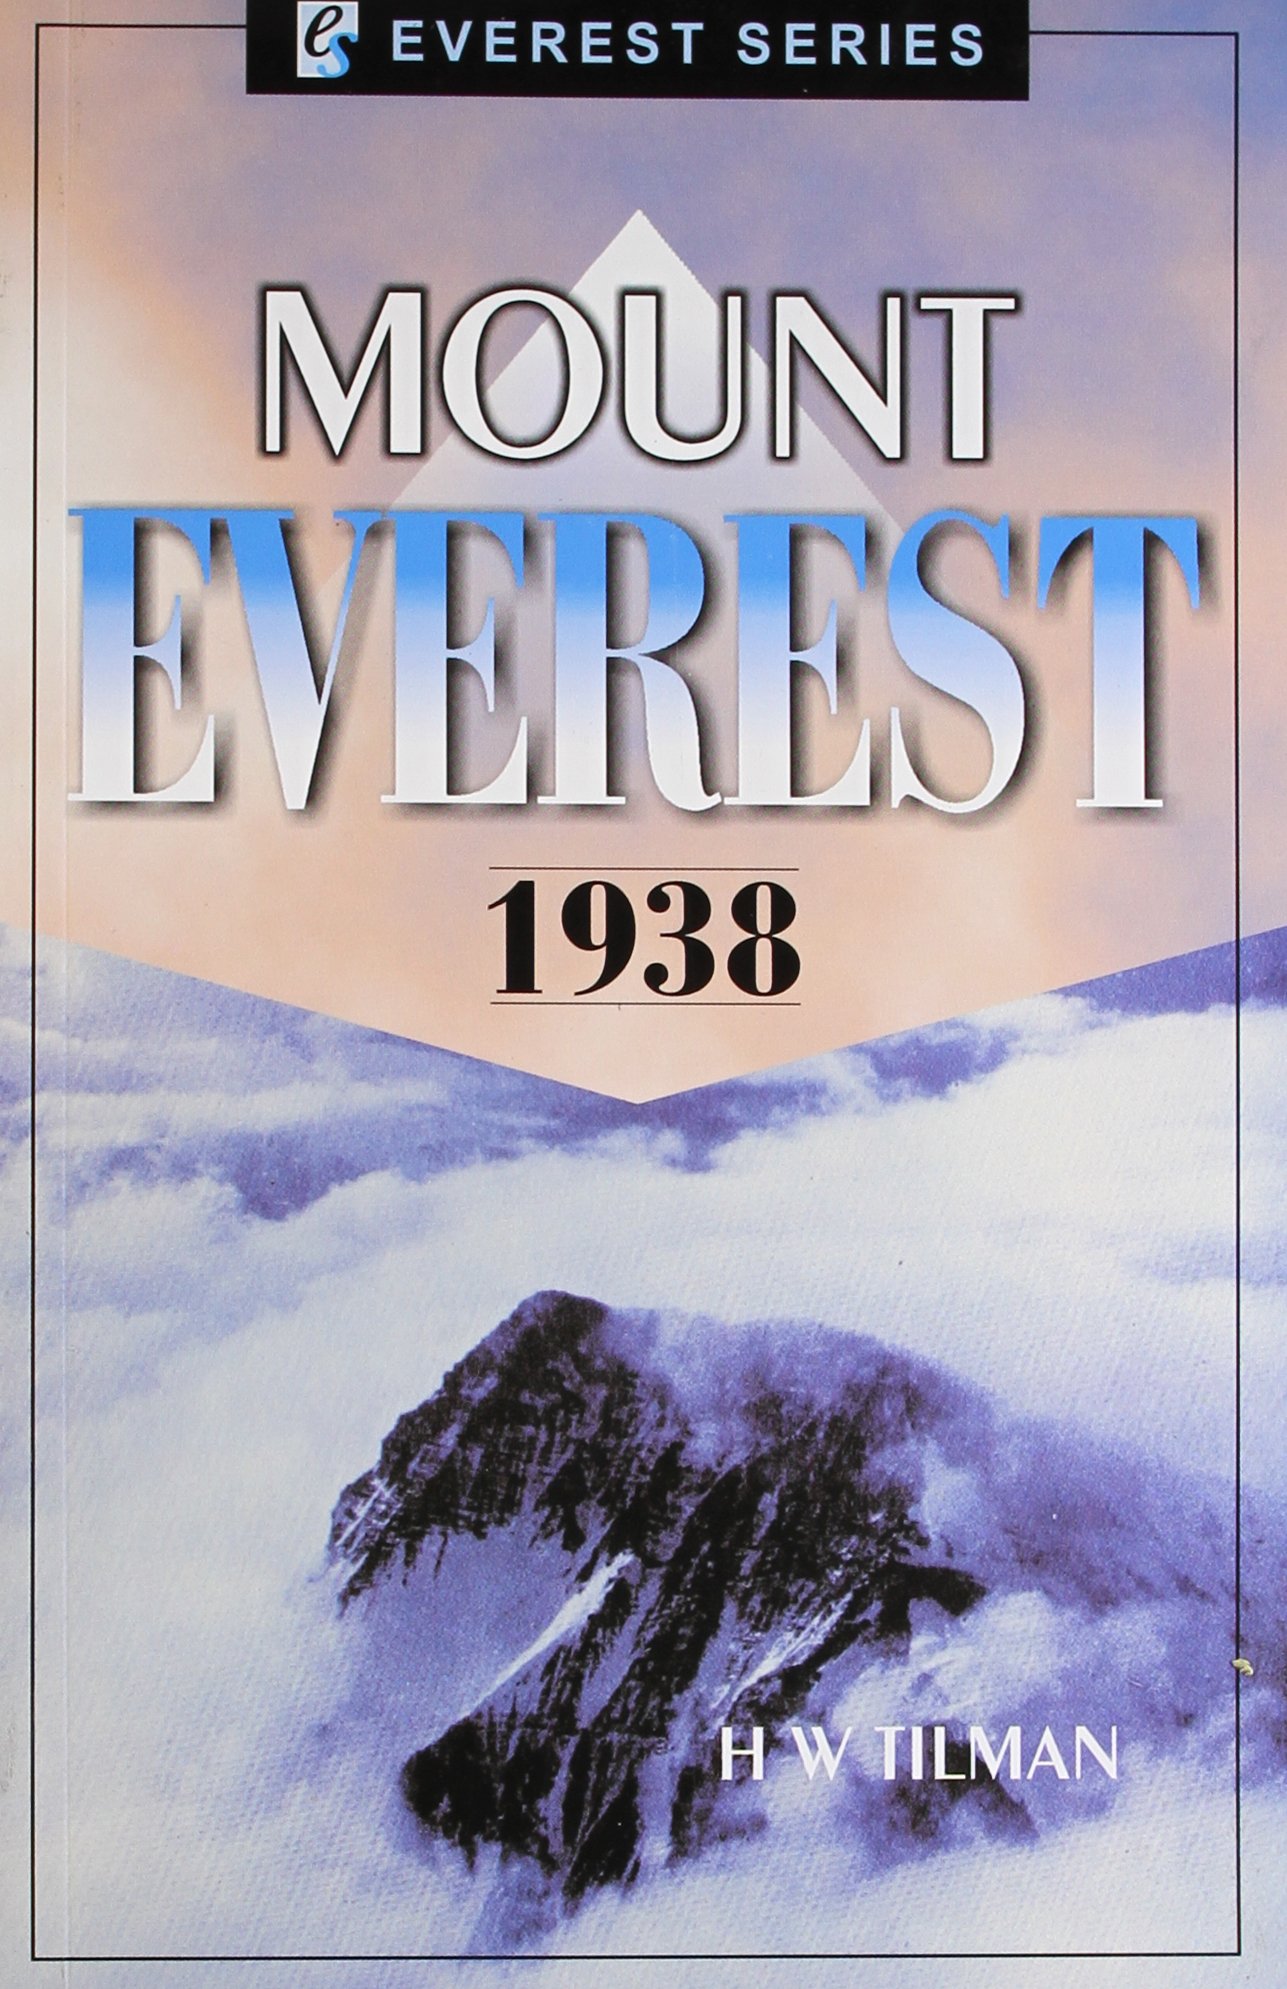 Mount Everest 1938 - Tillman (Everest Series/Pilgrims Publishing) (image)